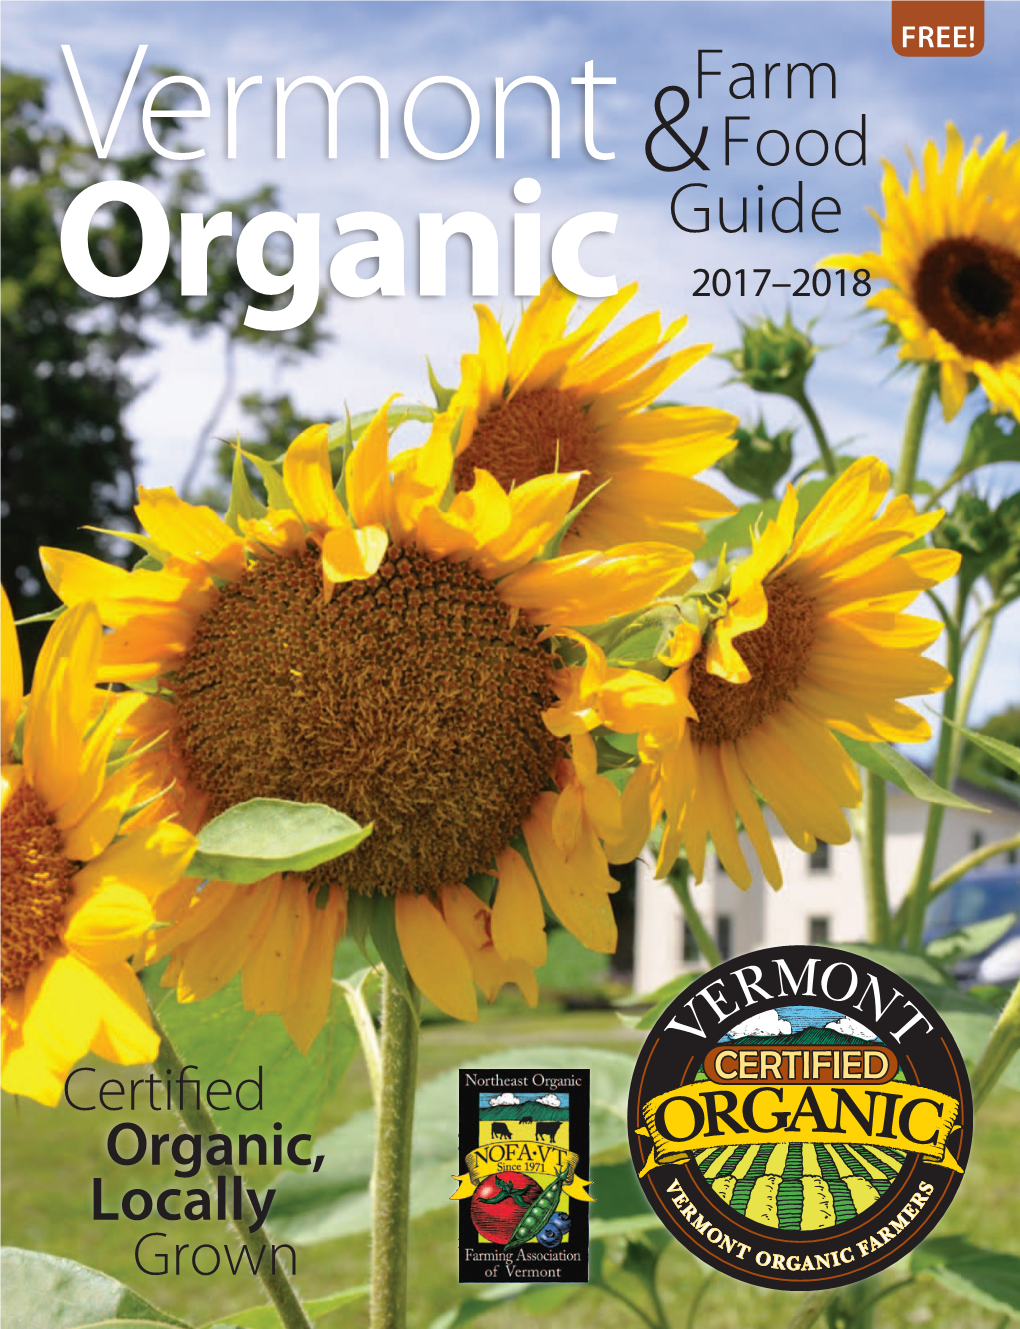 Vermont Organic Farm & Food Guide 2017-2018